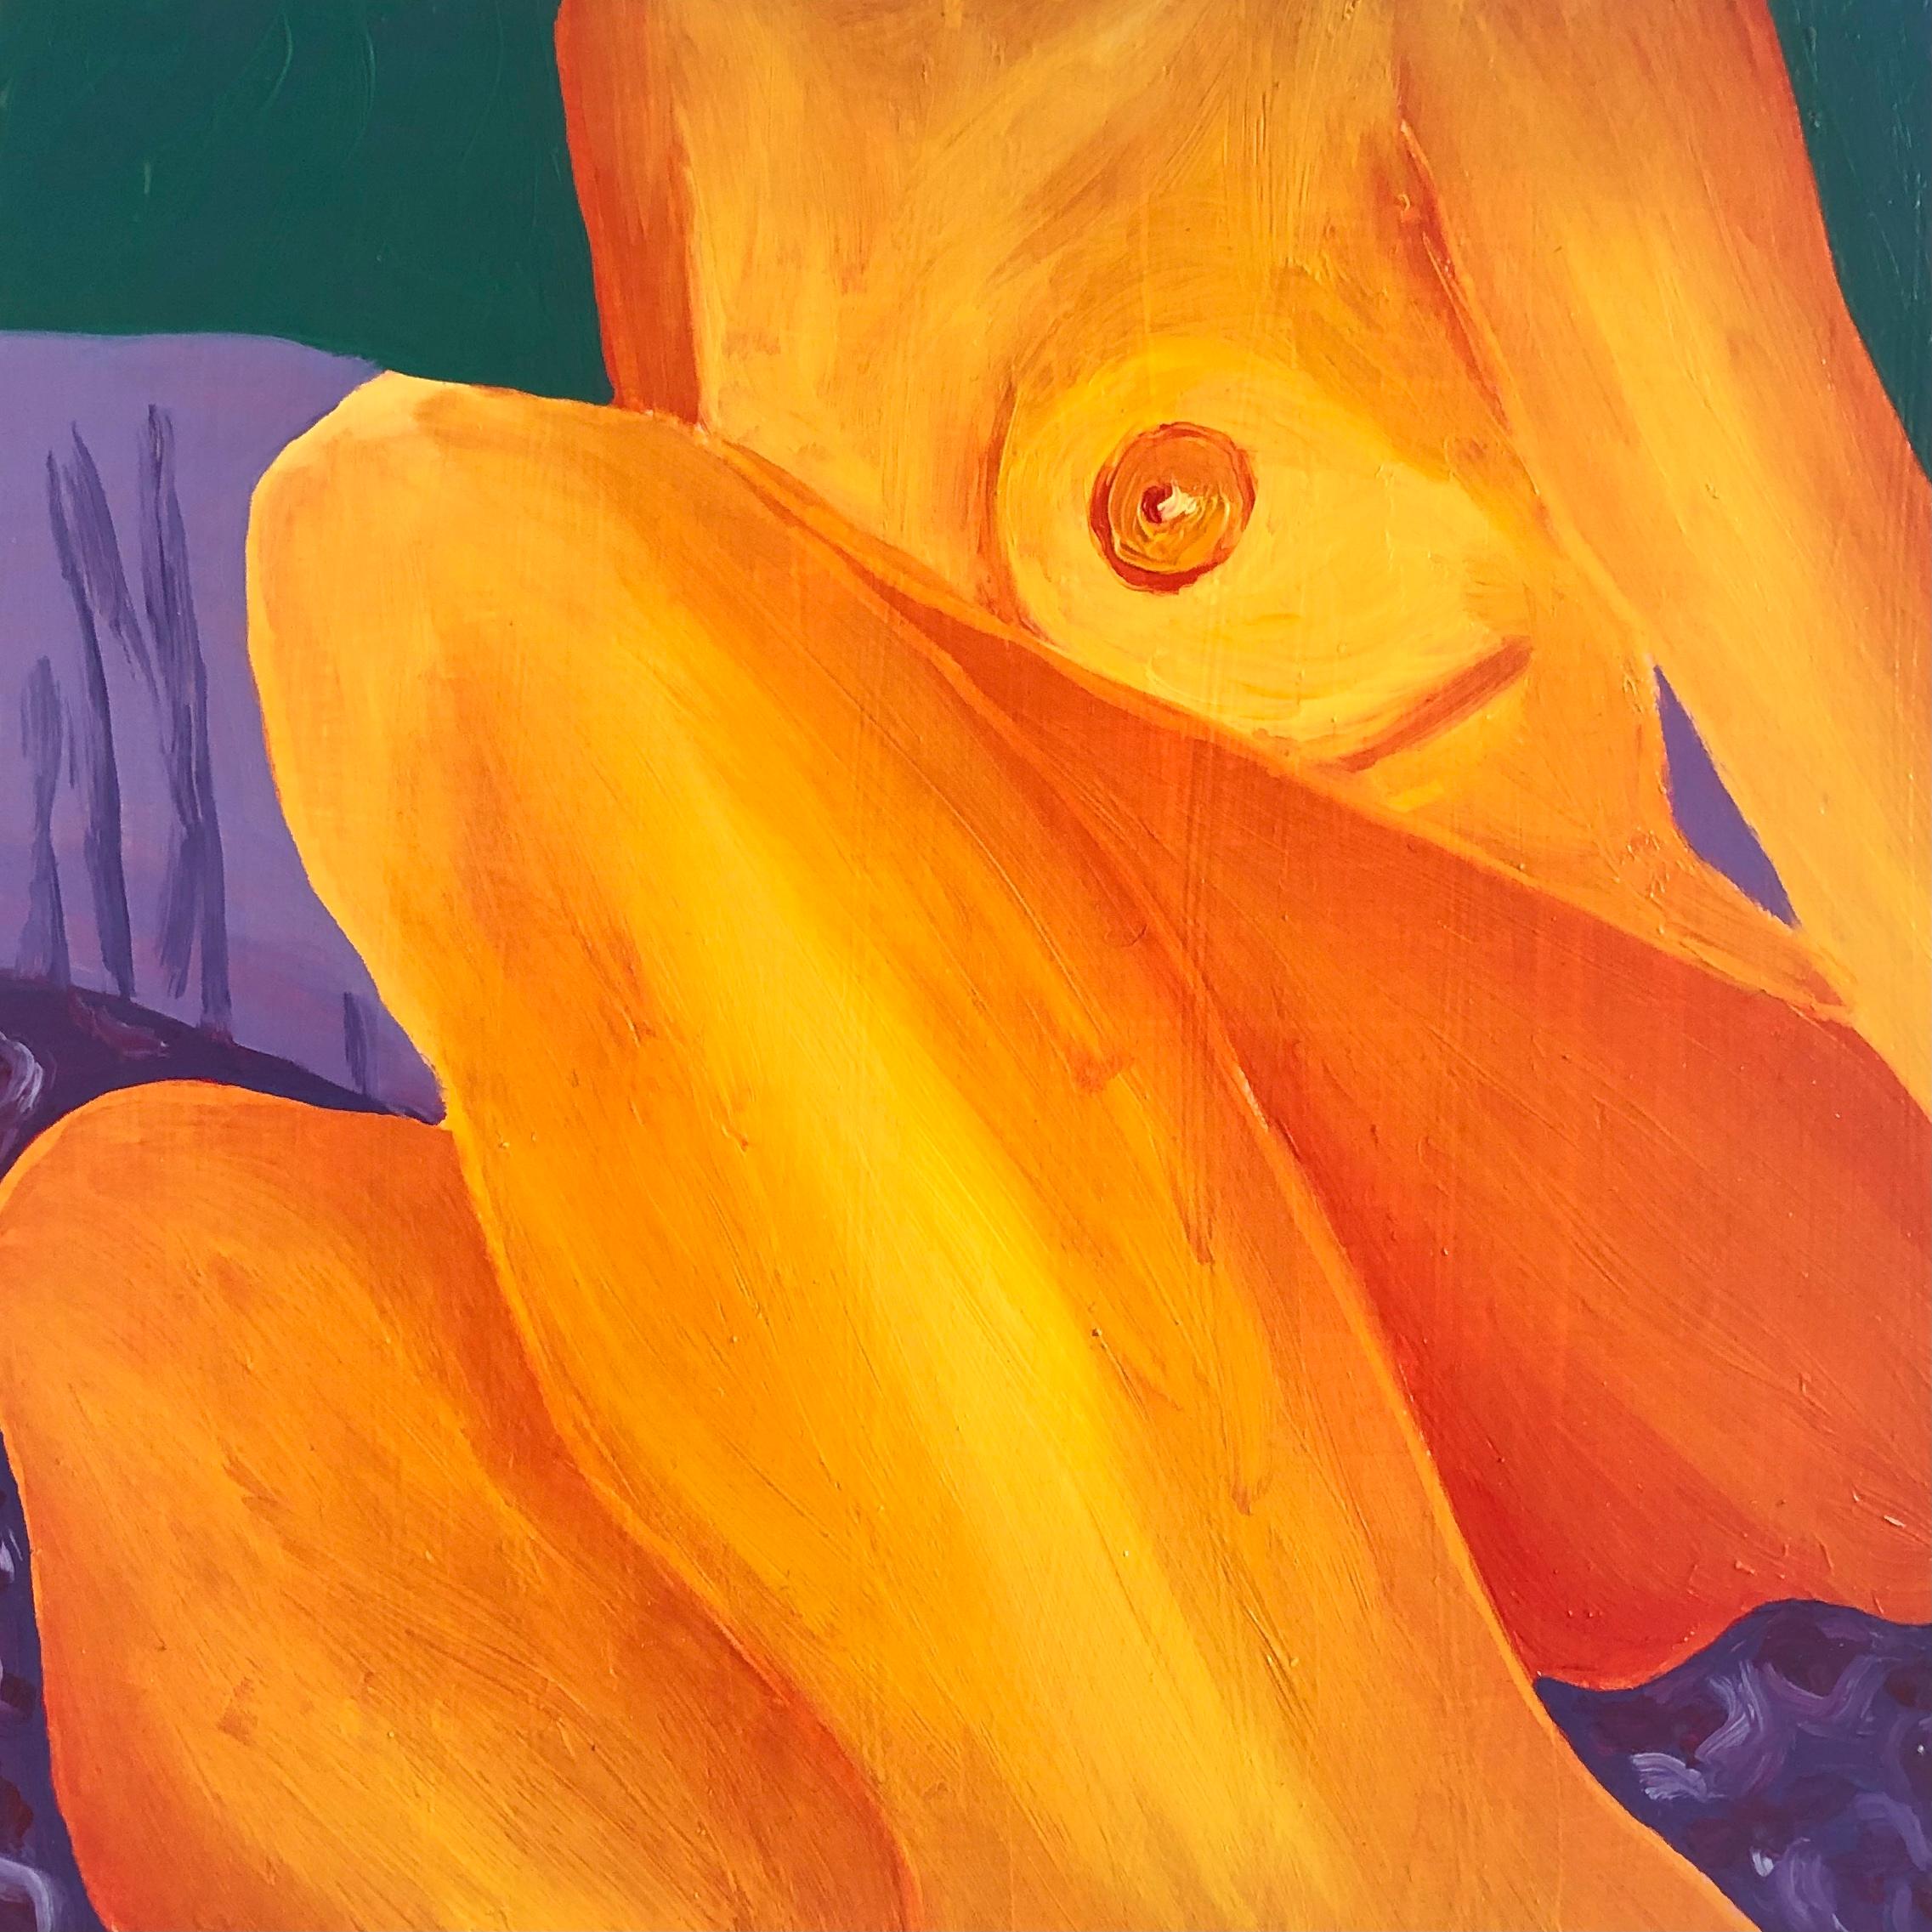 Jessica Rubin Figurative Painting - Tender (2020), golden yellow & orange nude oil on wood panel figurative painting